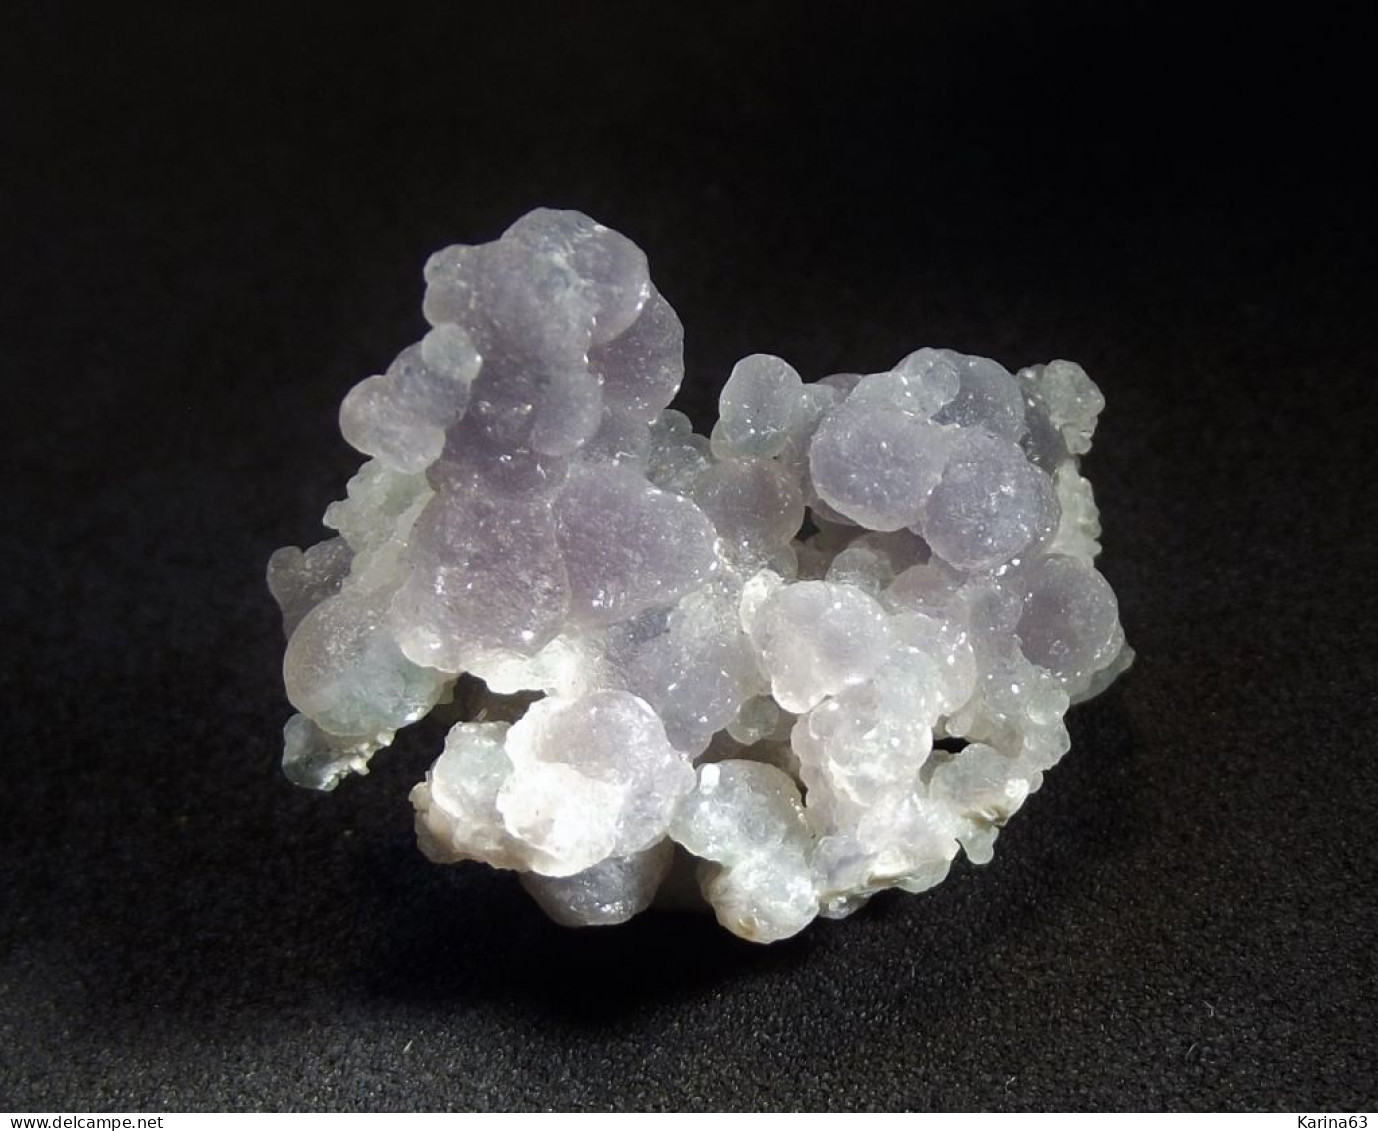 Quartz Var. Chalcedony - Grape Agate  (2 X 1.5 X 1 Cm ) Mamuju - West Sulawesi Province - Indonesia - Minerals